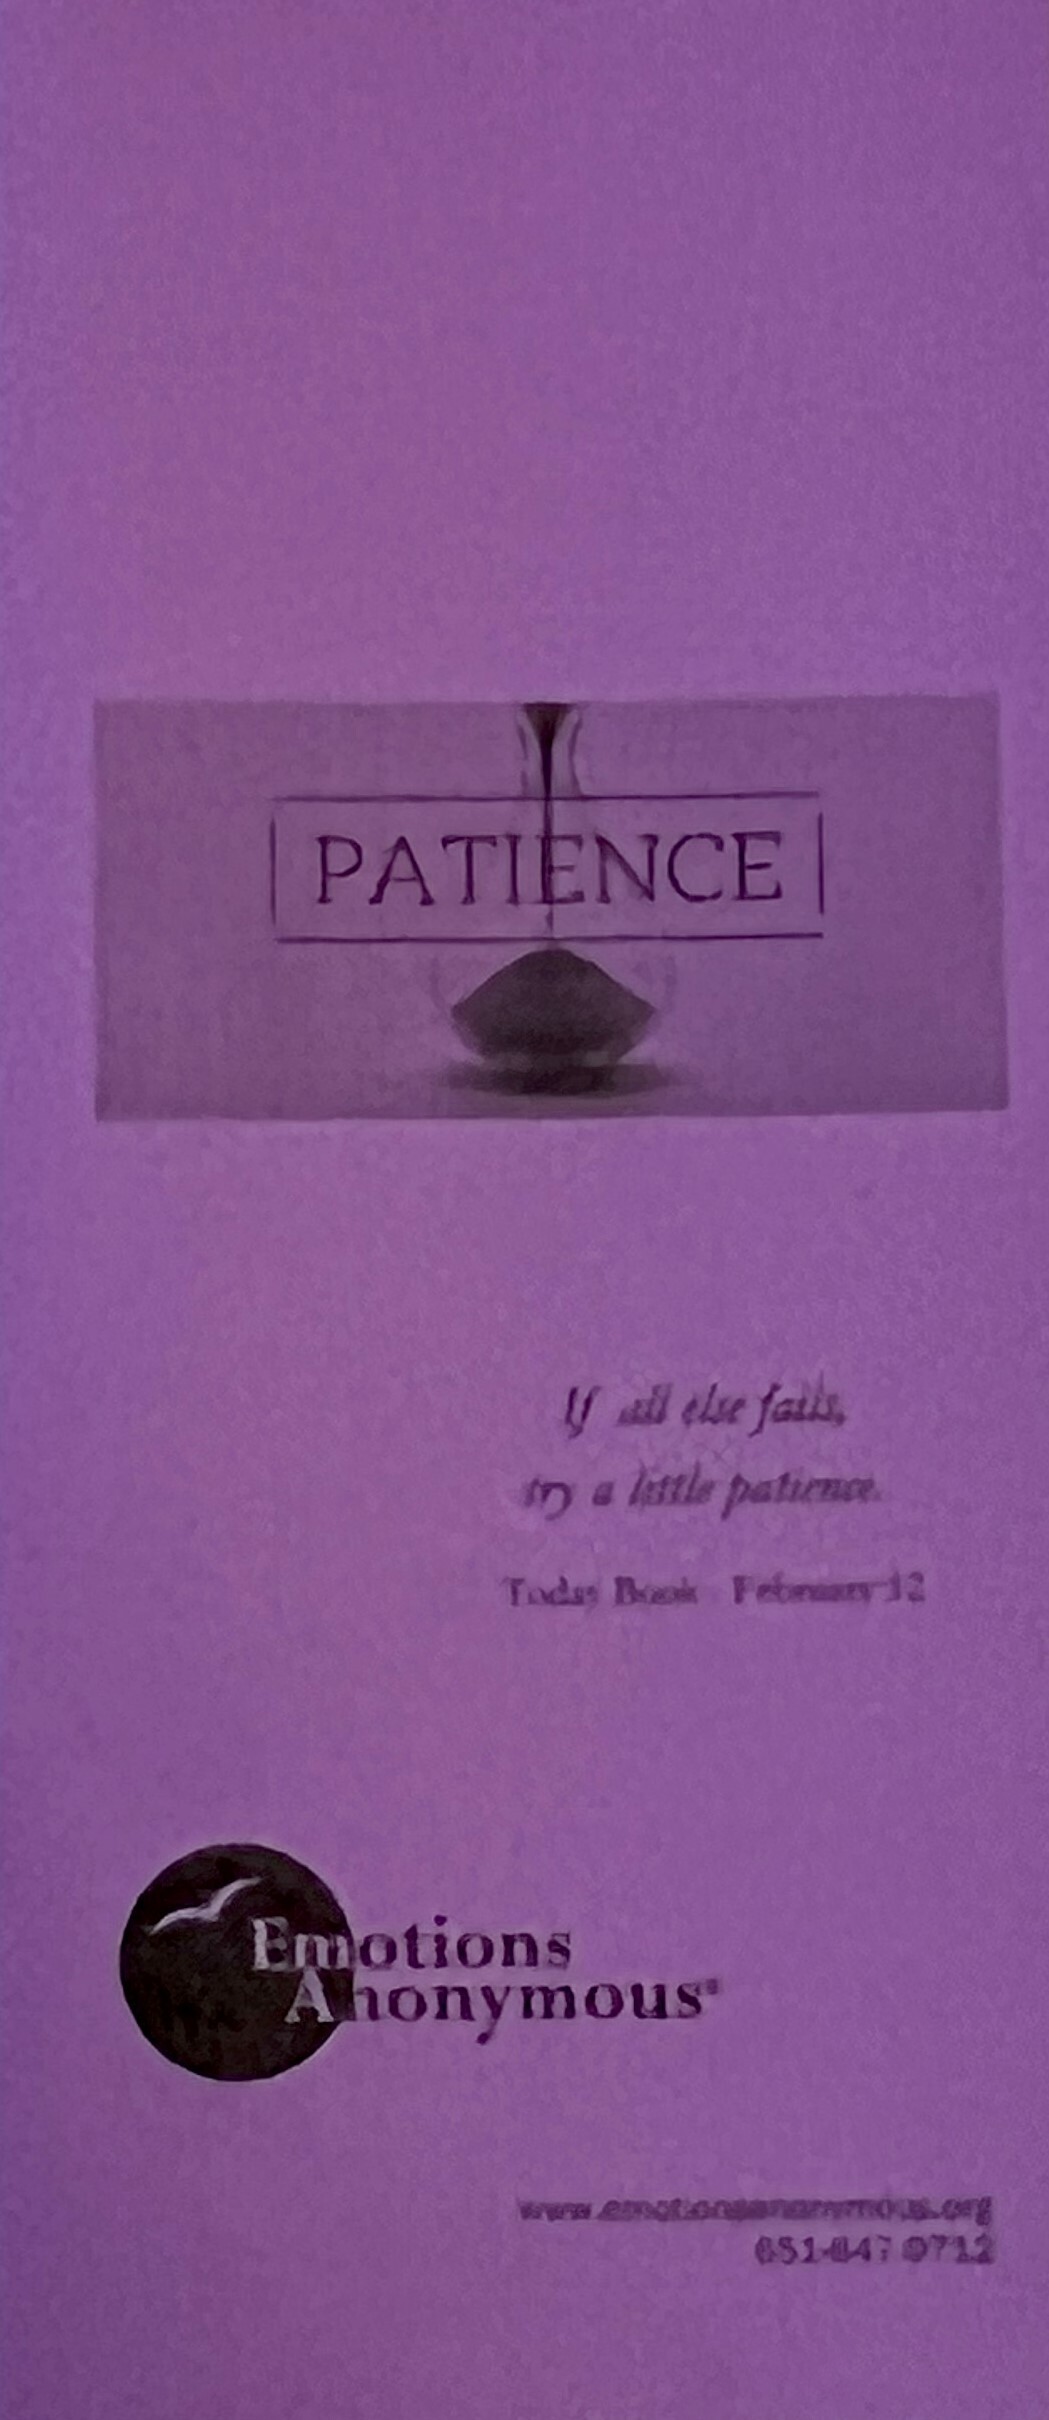 Item #58 — "Patience" Pamphlet